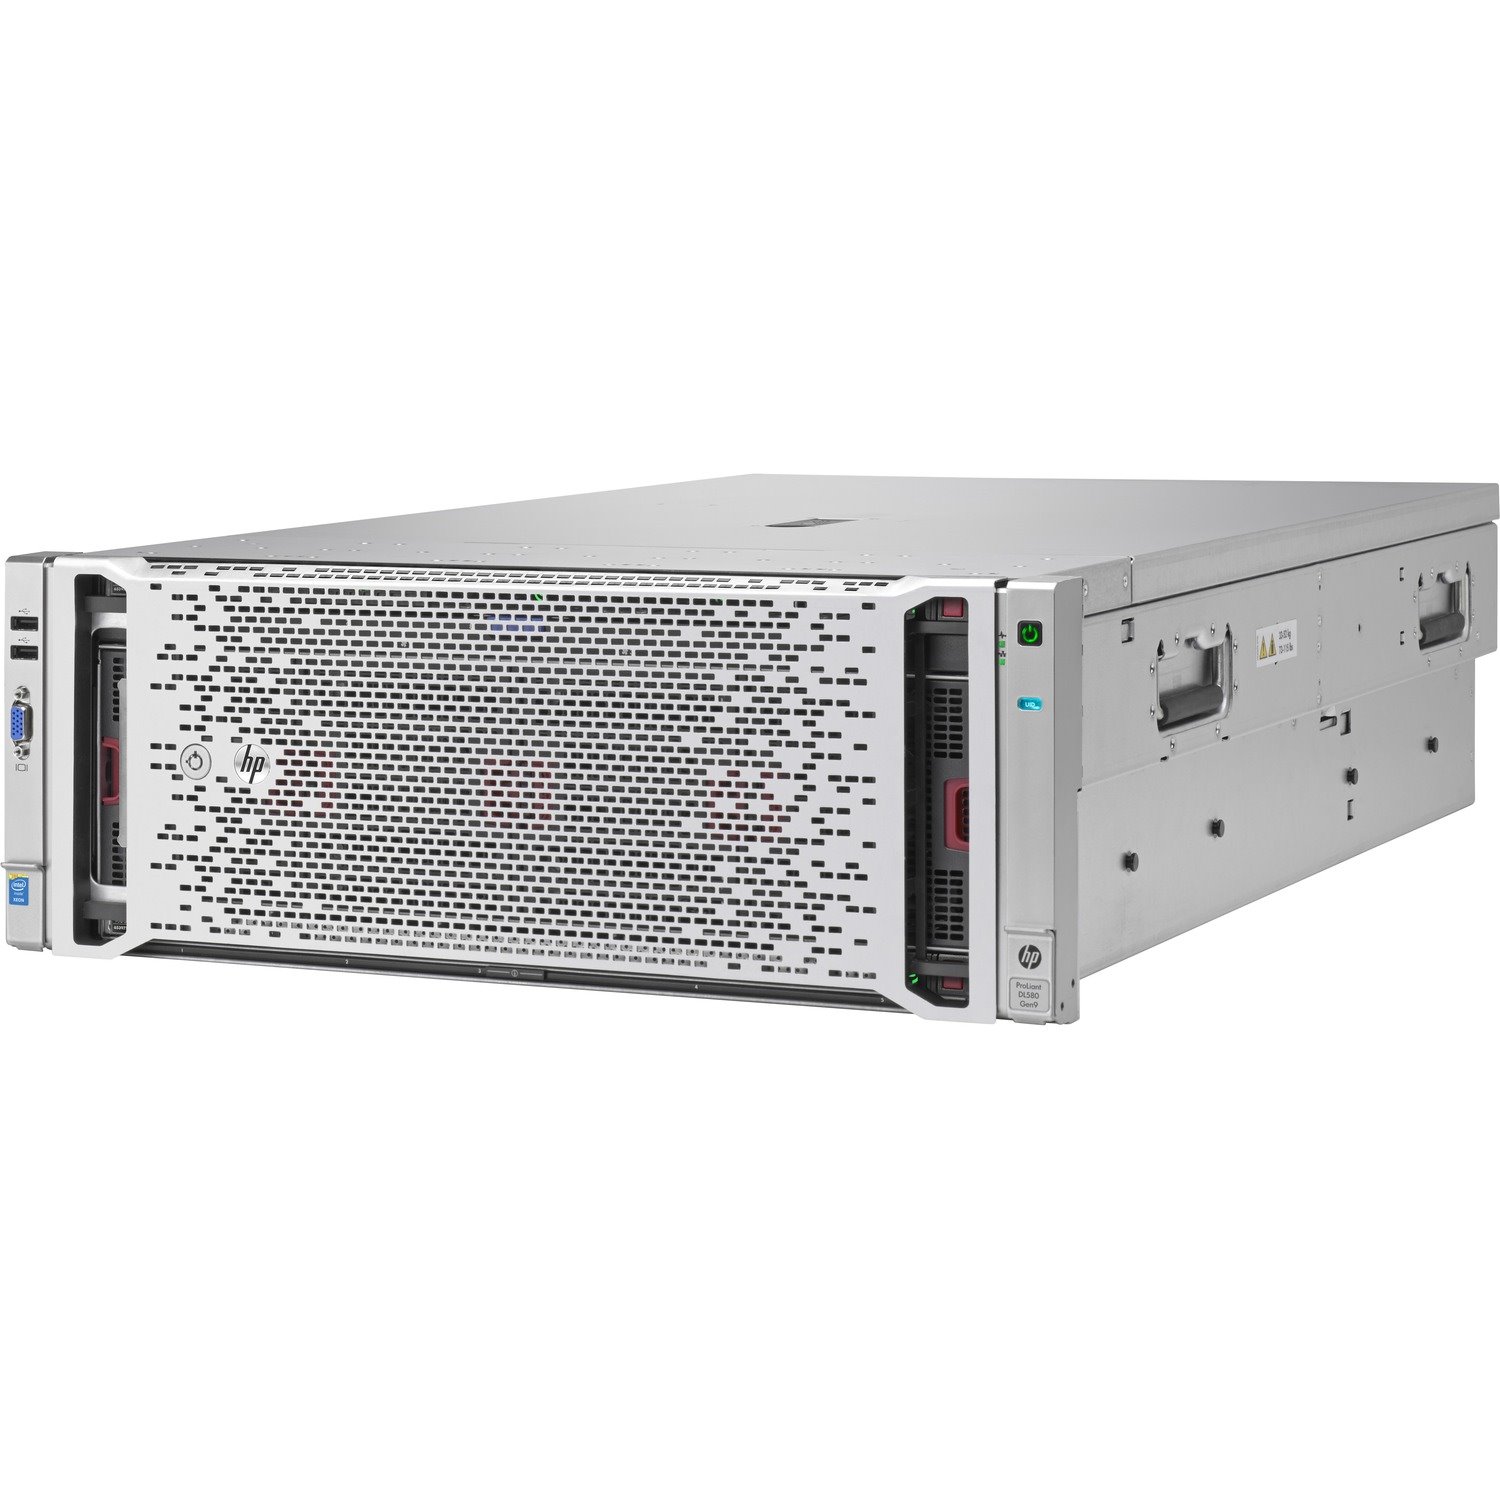 HPE ProLiant DL580 G9 4U Rack Server - 2 x Intel Xeon E7-8880 v3 2.30 GHz - 128 GB RAM - 12Gb/s SAS Controller